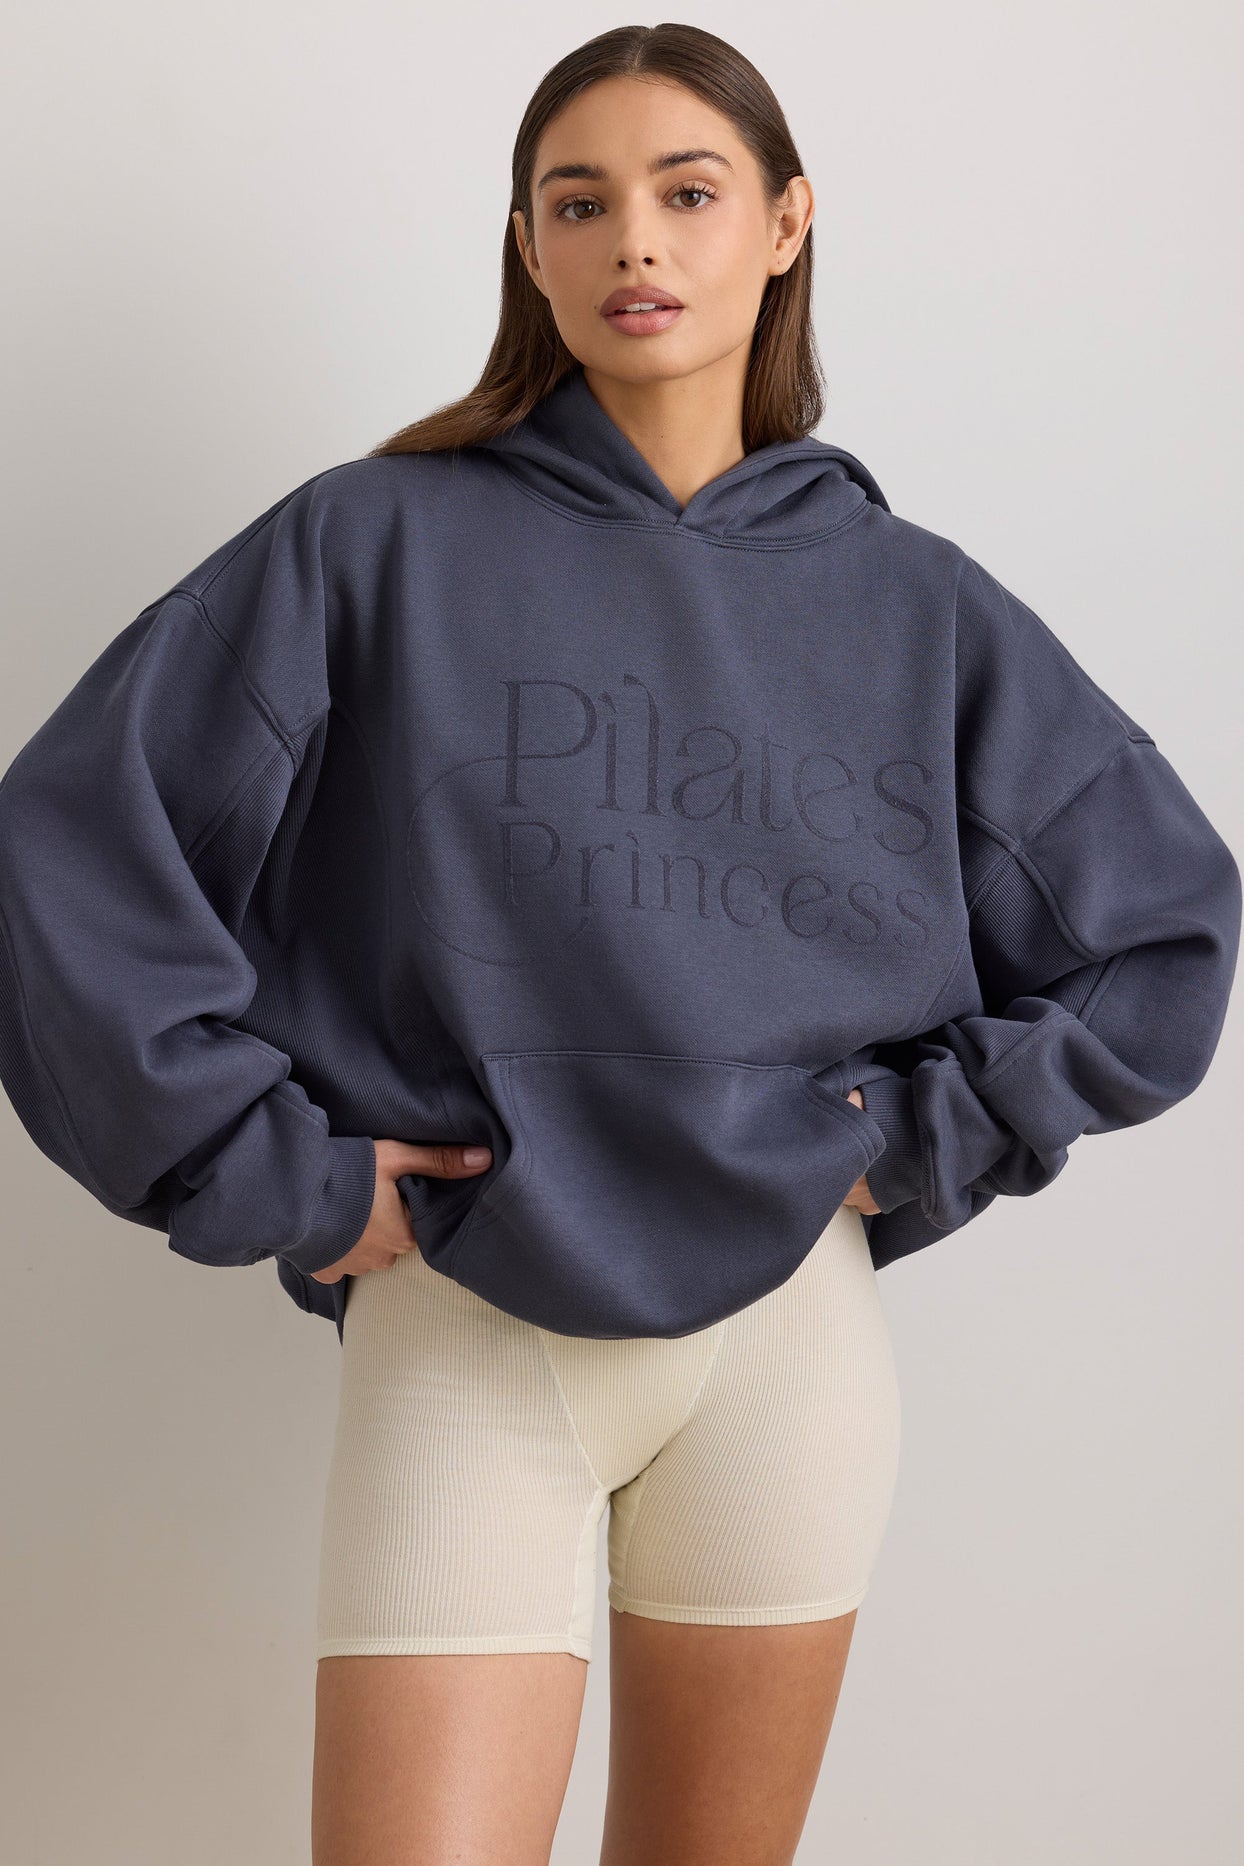 Pilates Princess Oversized Hooded Sweatshirt in Light Grey